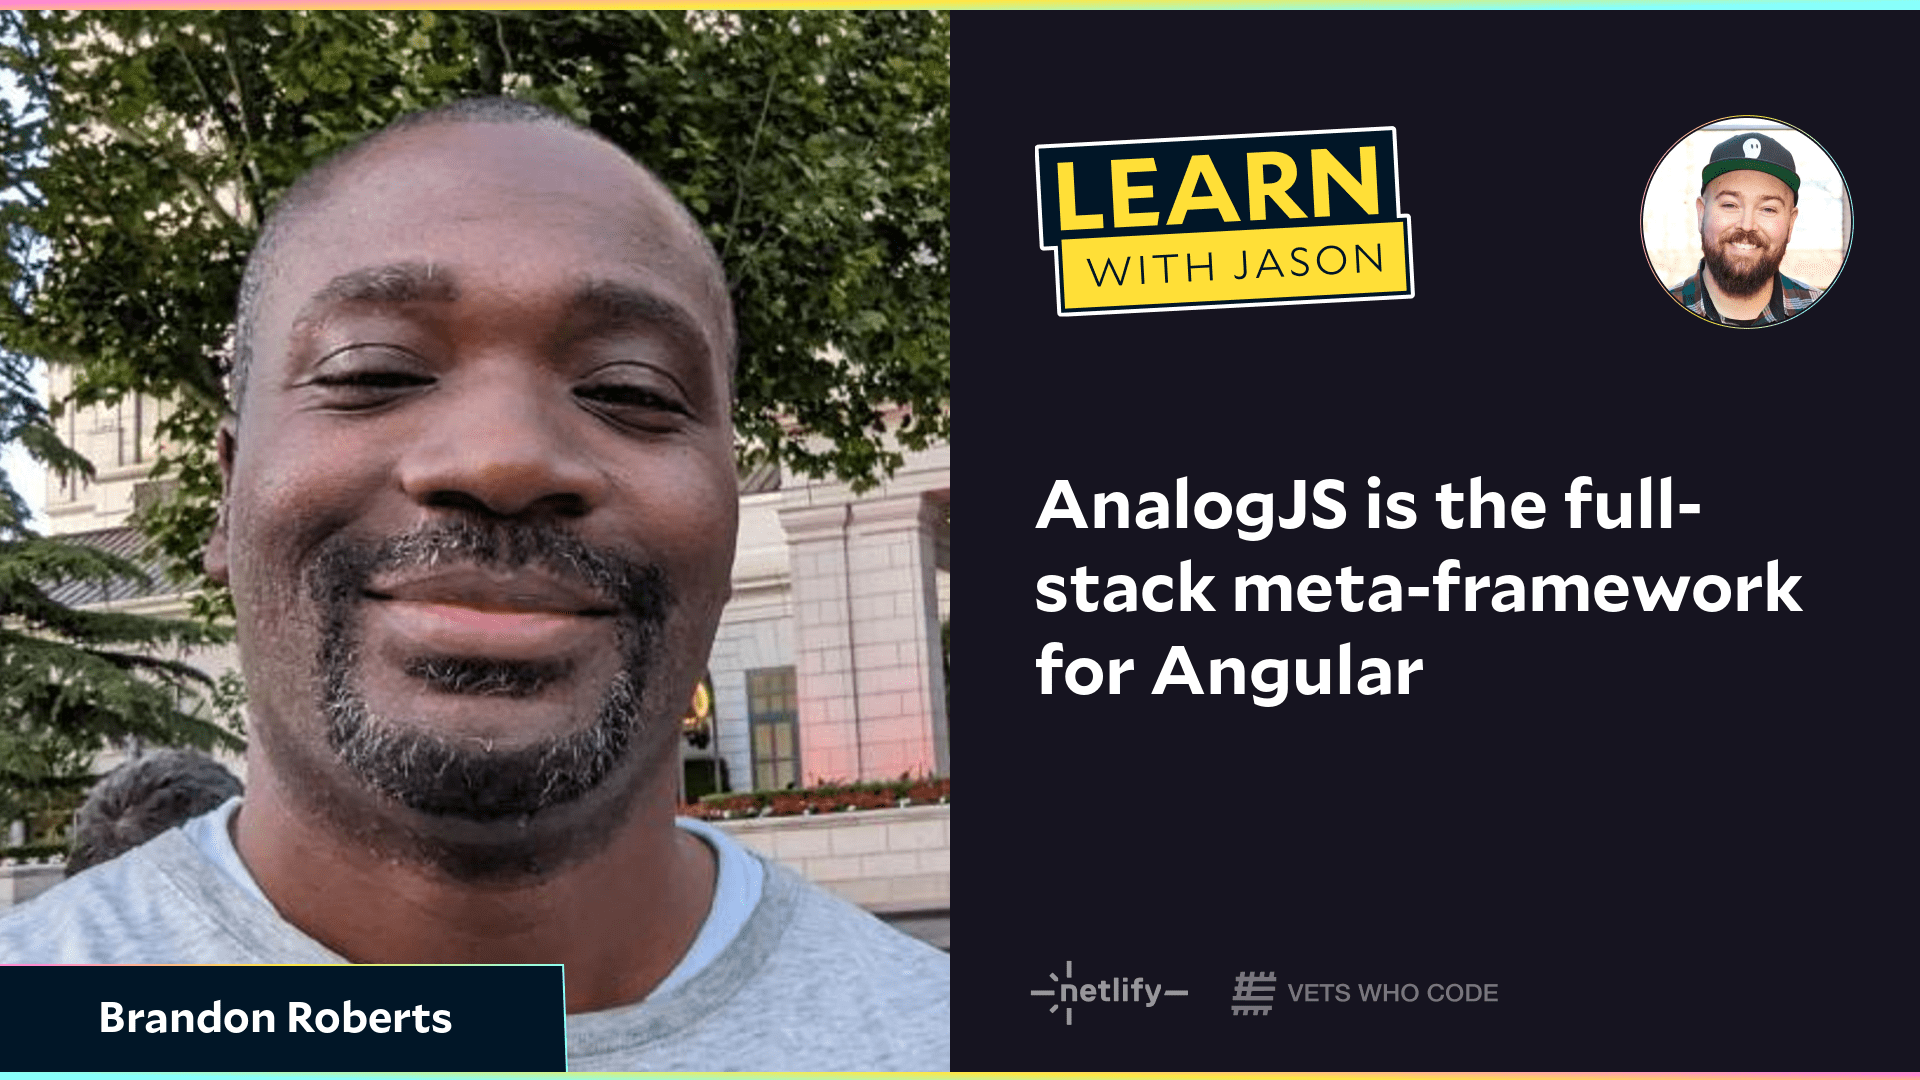 AnalogJS is the full-stack meta-framework for Angular (with Brandon Roberts)